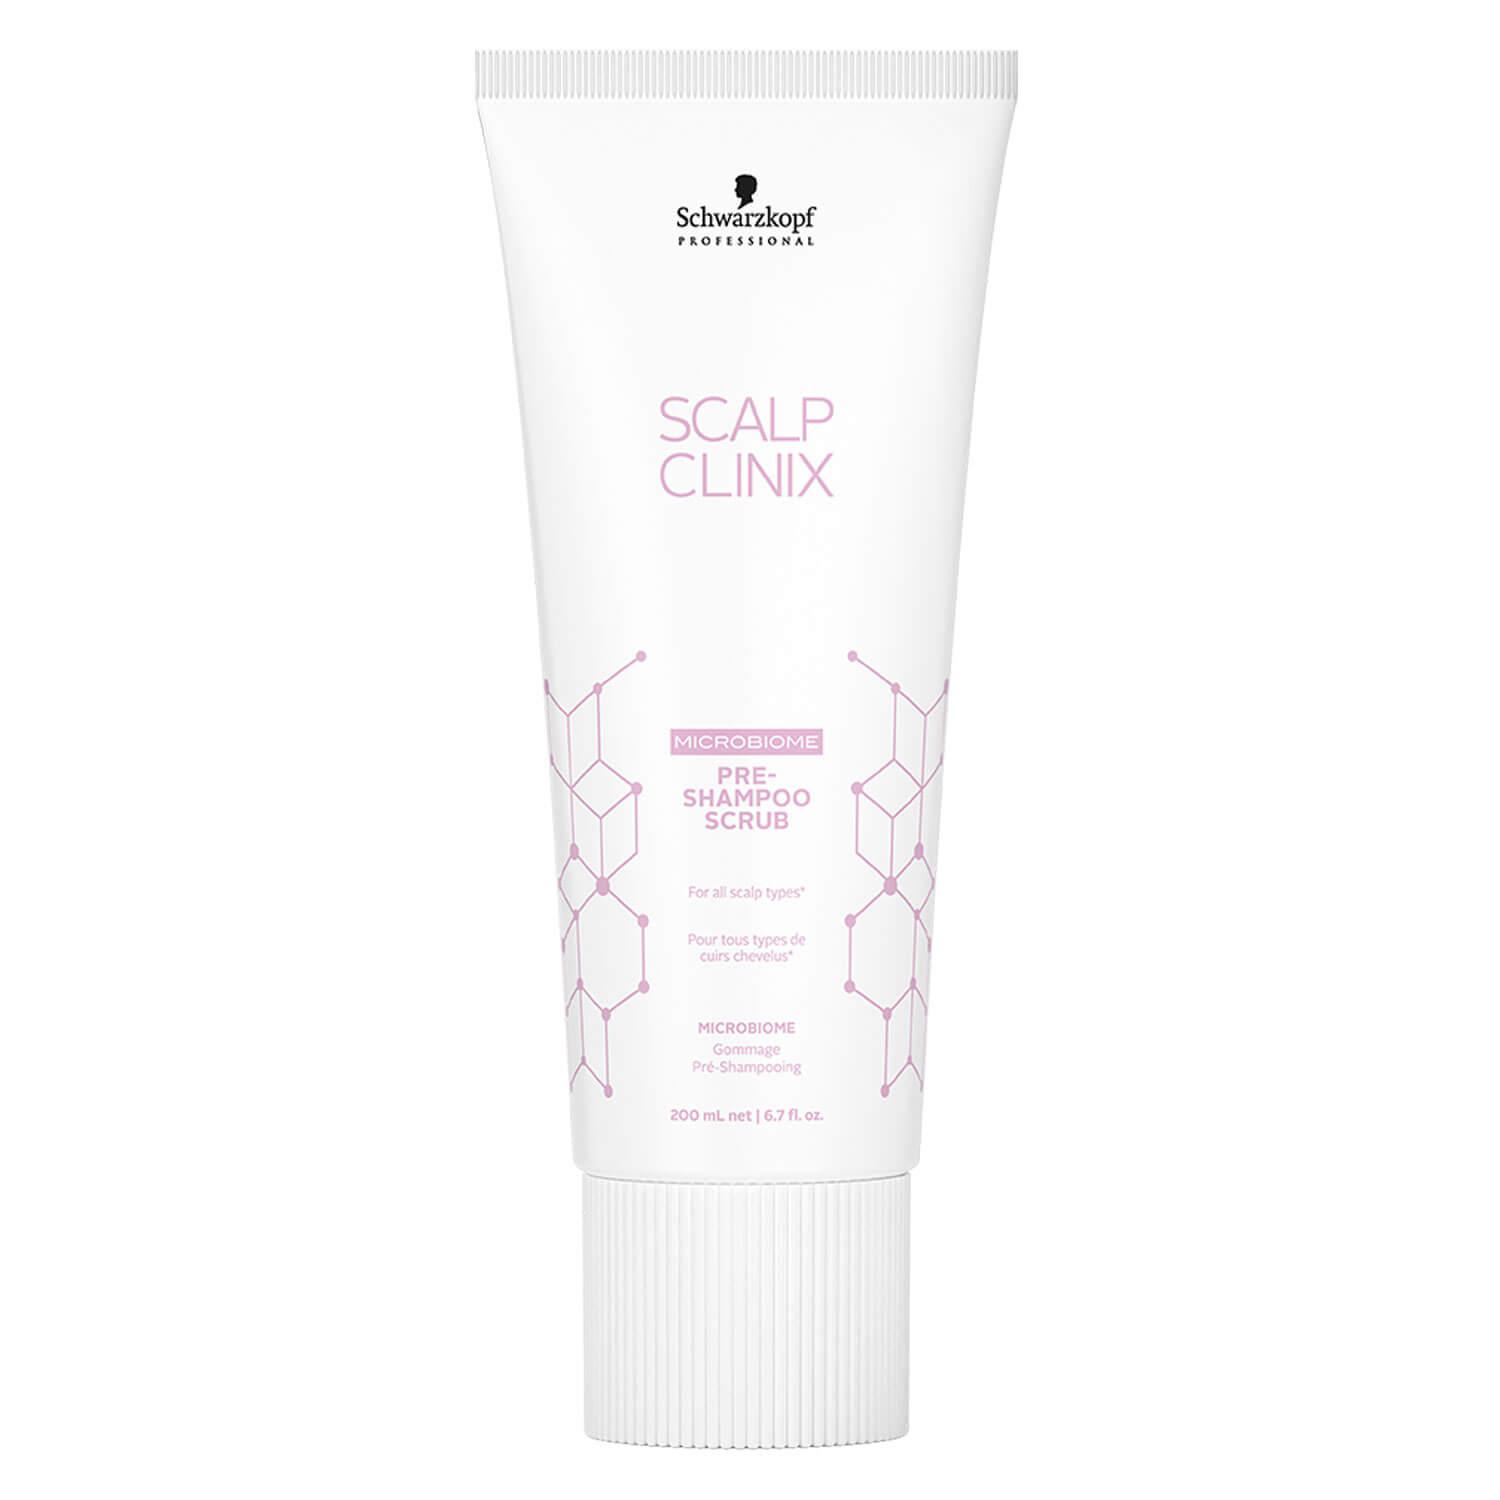 Scalp Clinix - Pre-Shampoo Scrub Salon Treatment